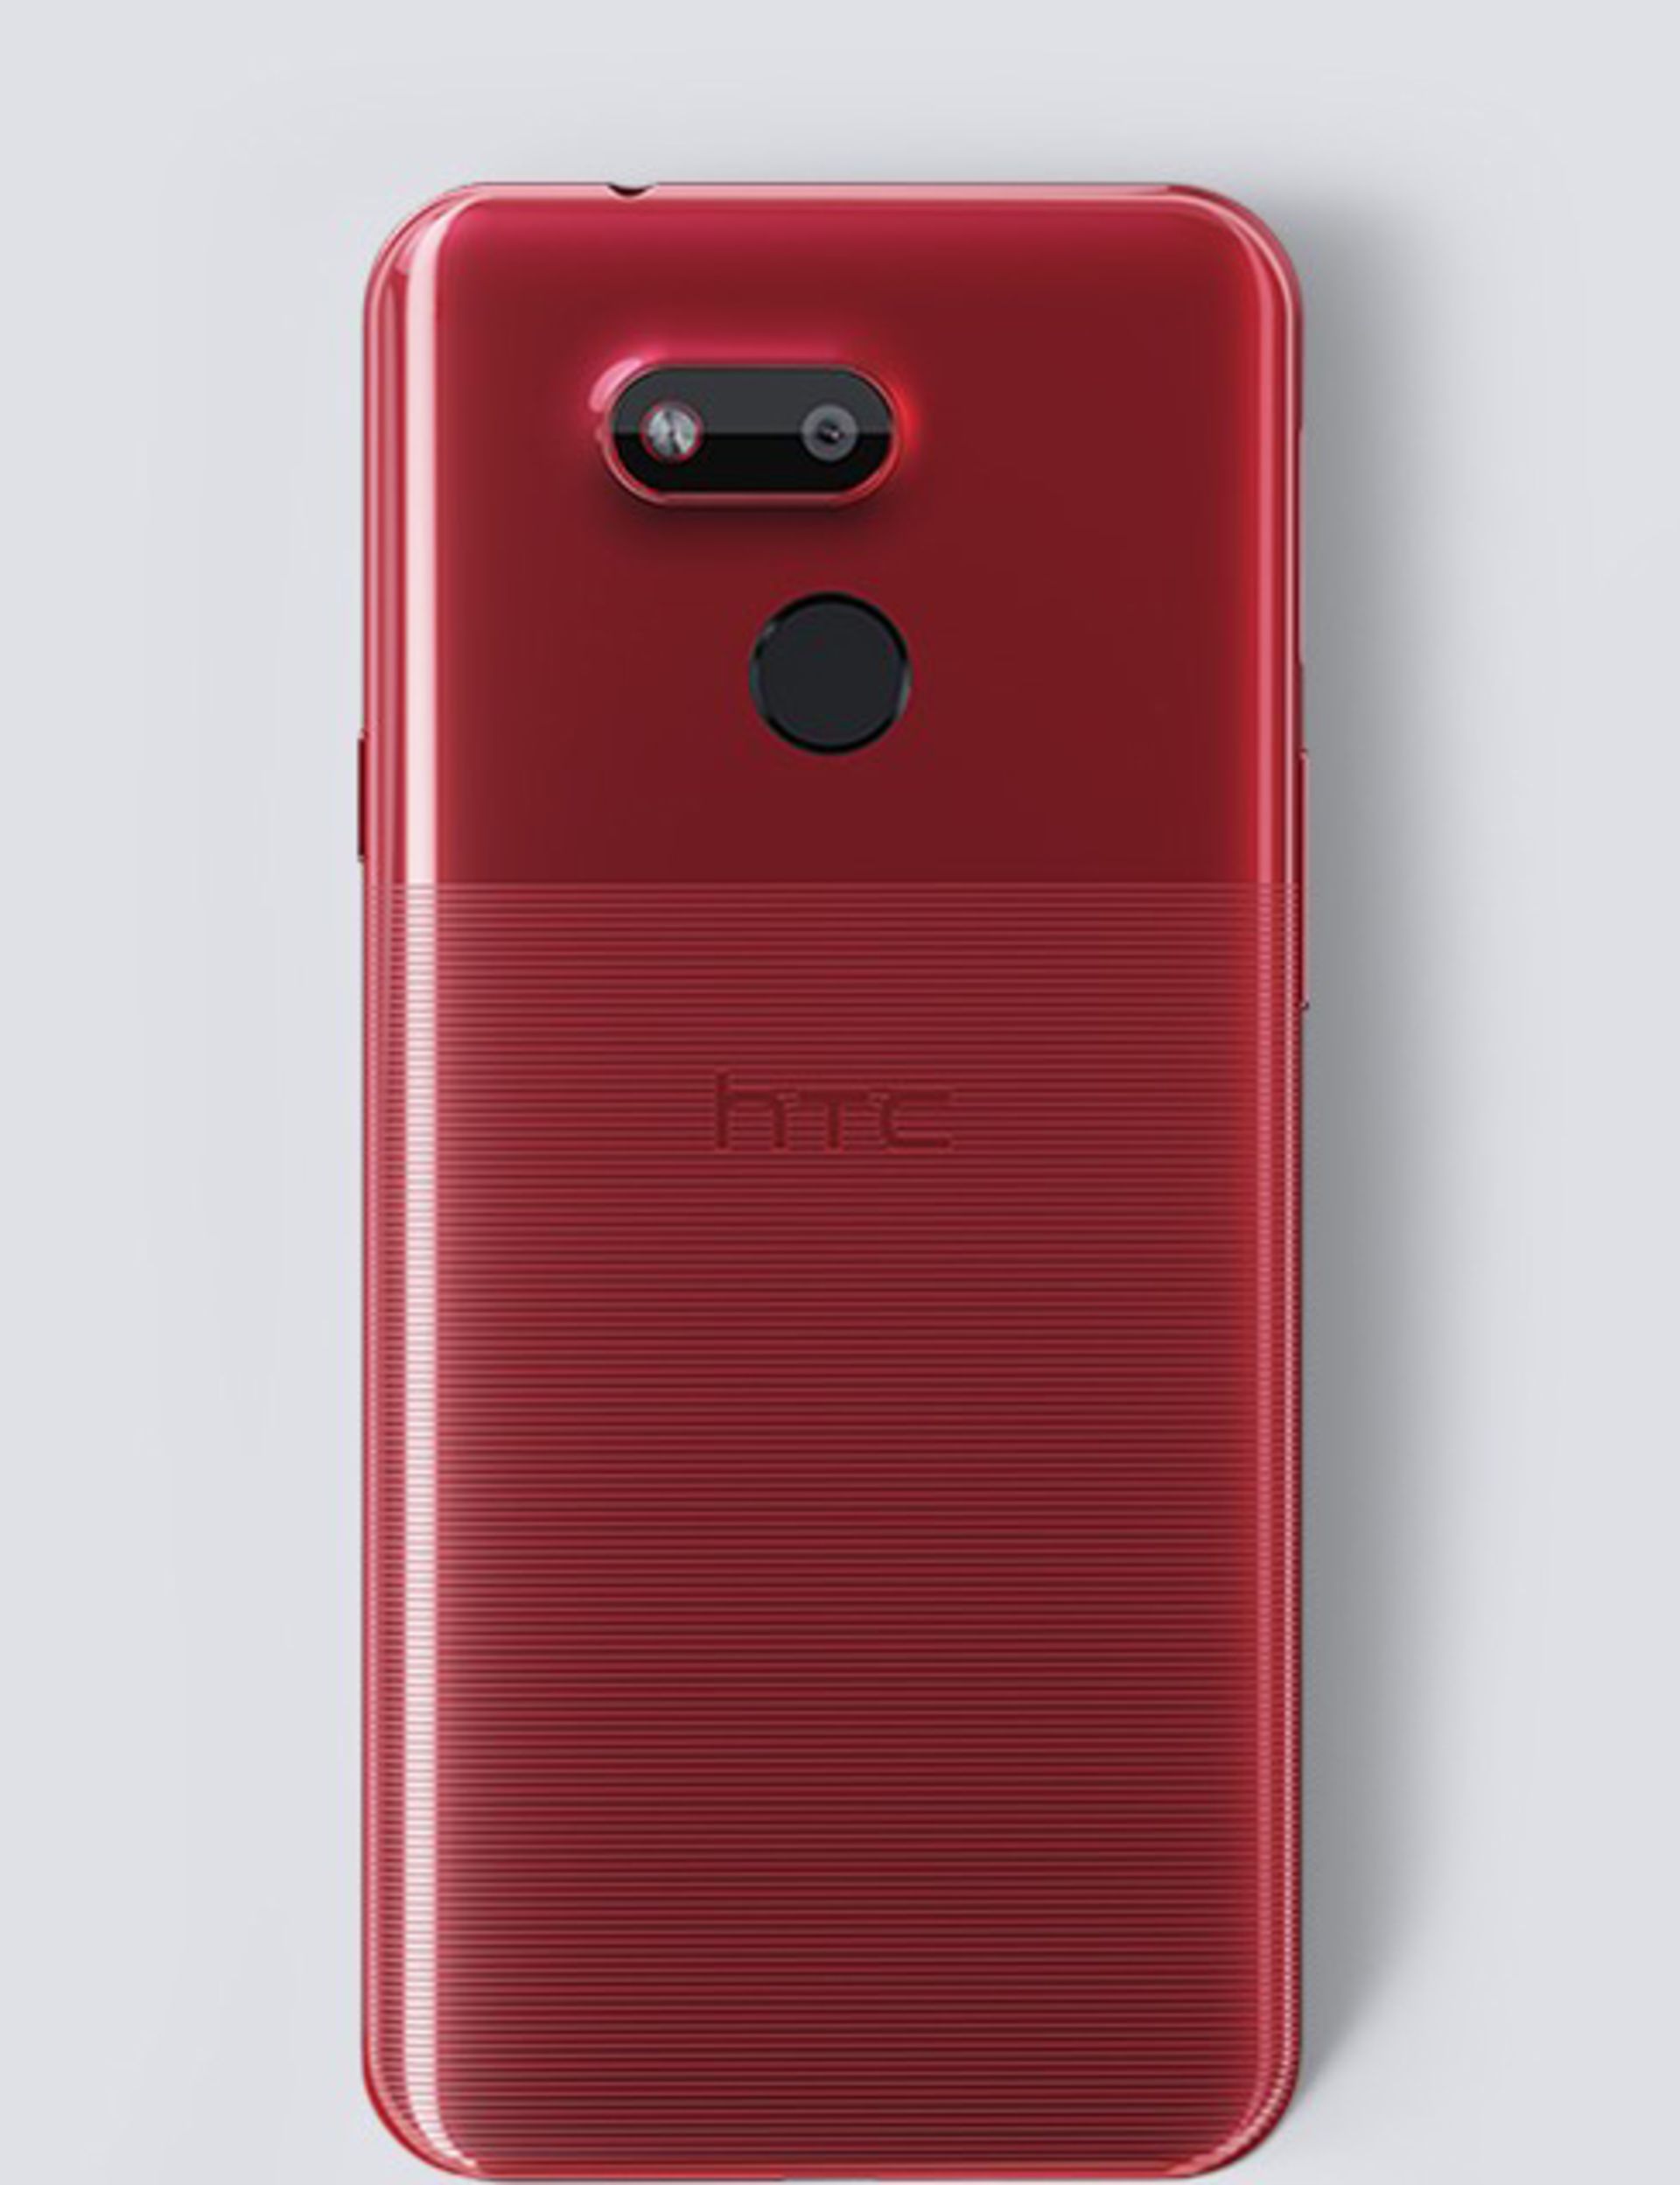 اچ تی سی دیزایر 12 اس / HTC Desire 12s